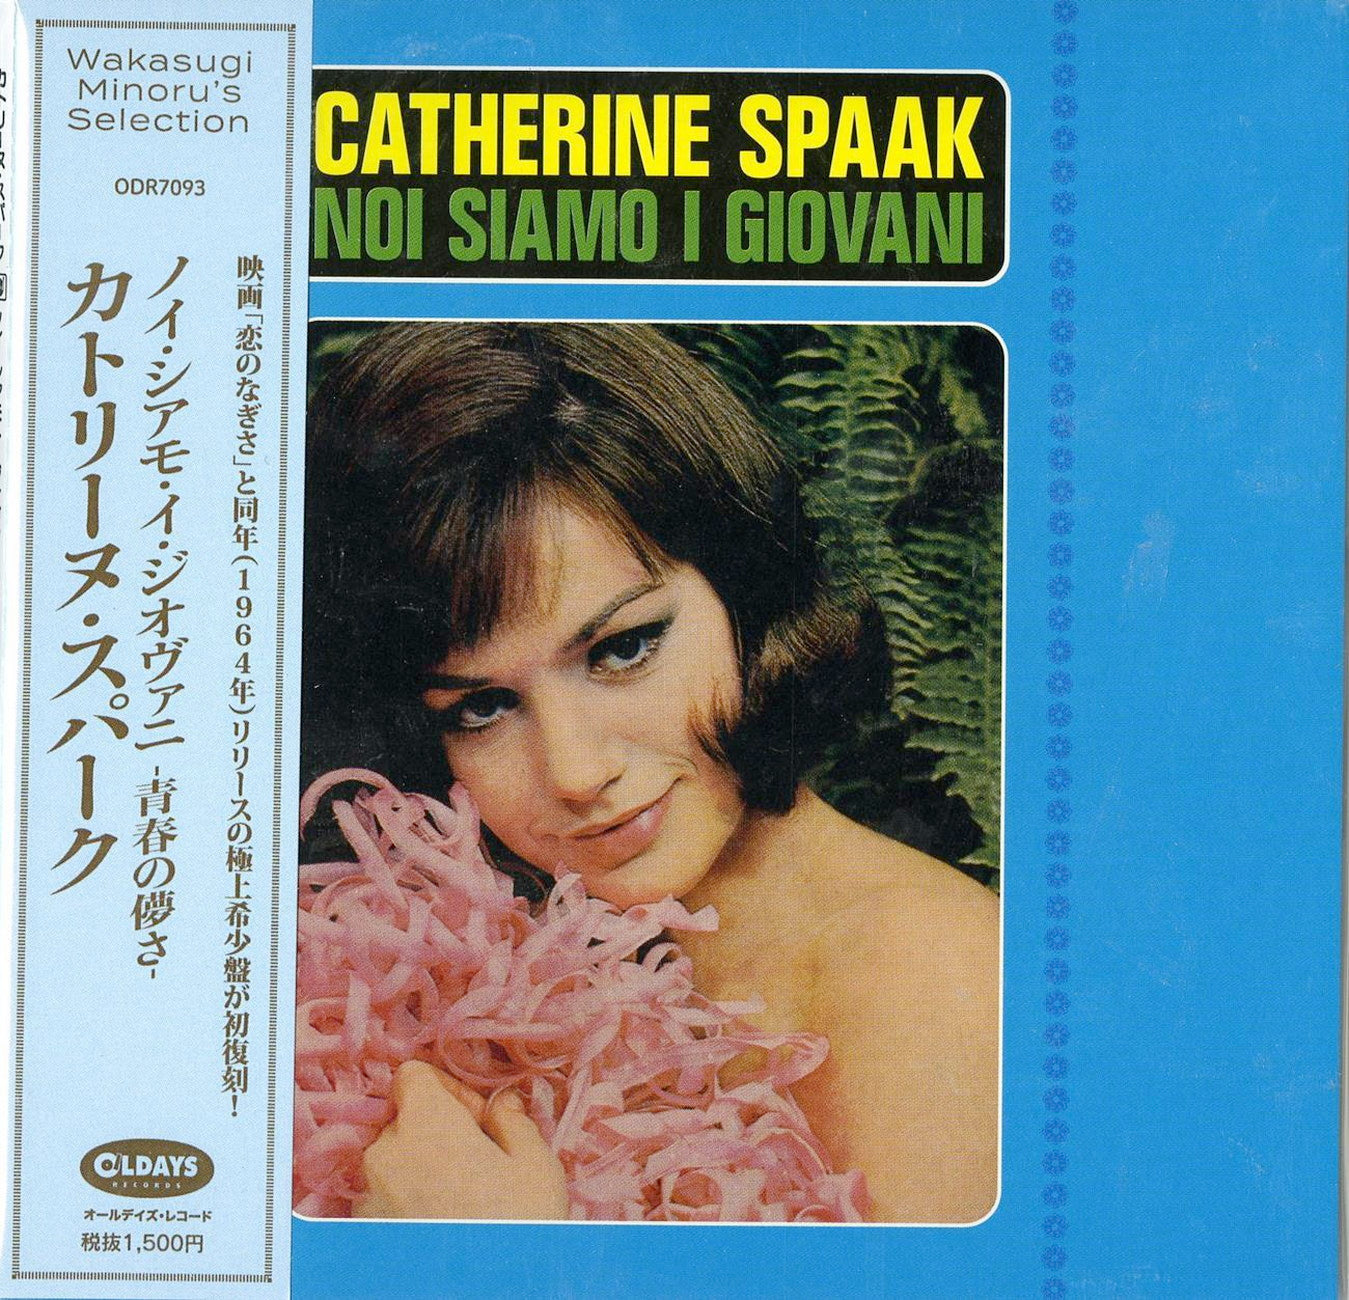 Catherine Spaak - Noi Siamo I Giovani - Japan  Mini LP CD Bonus Track